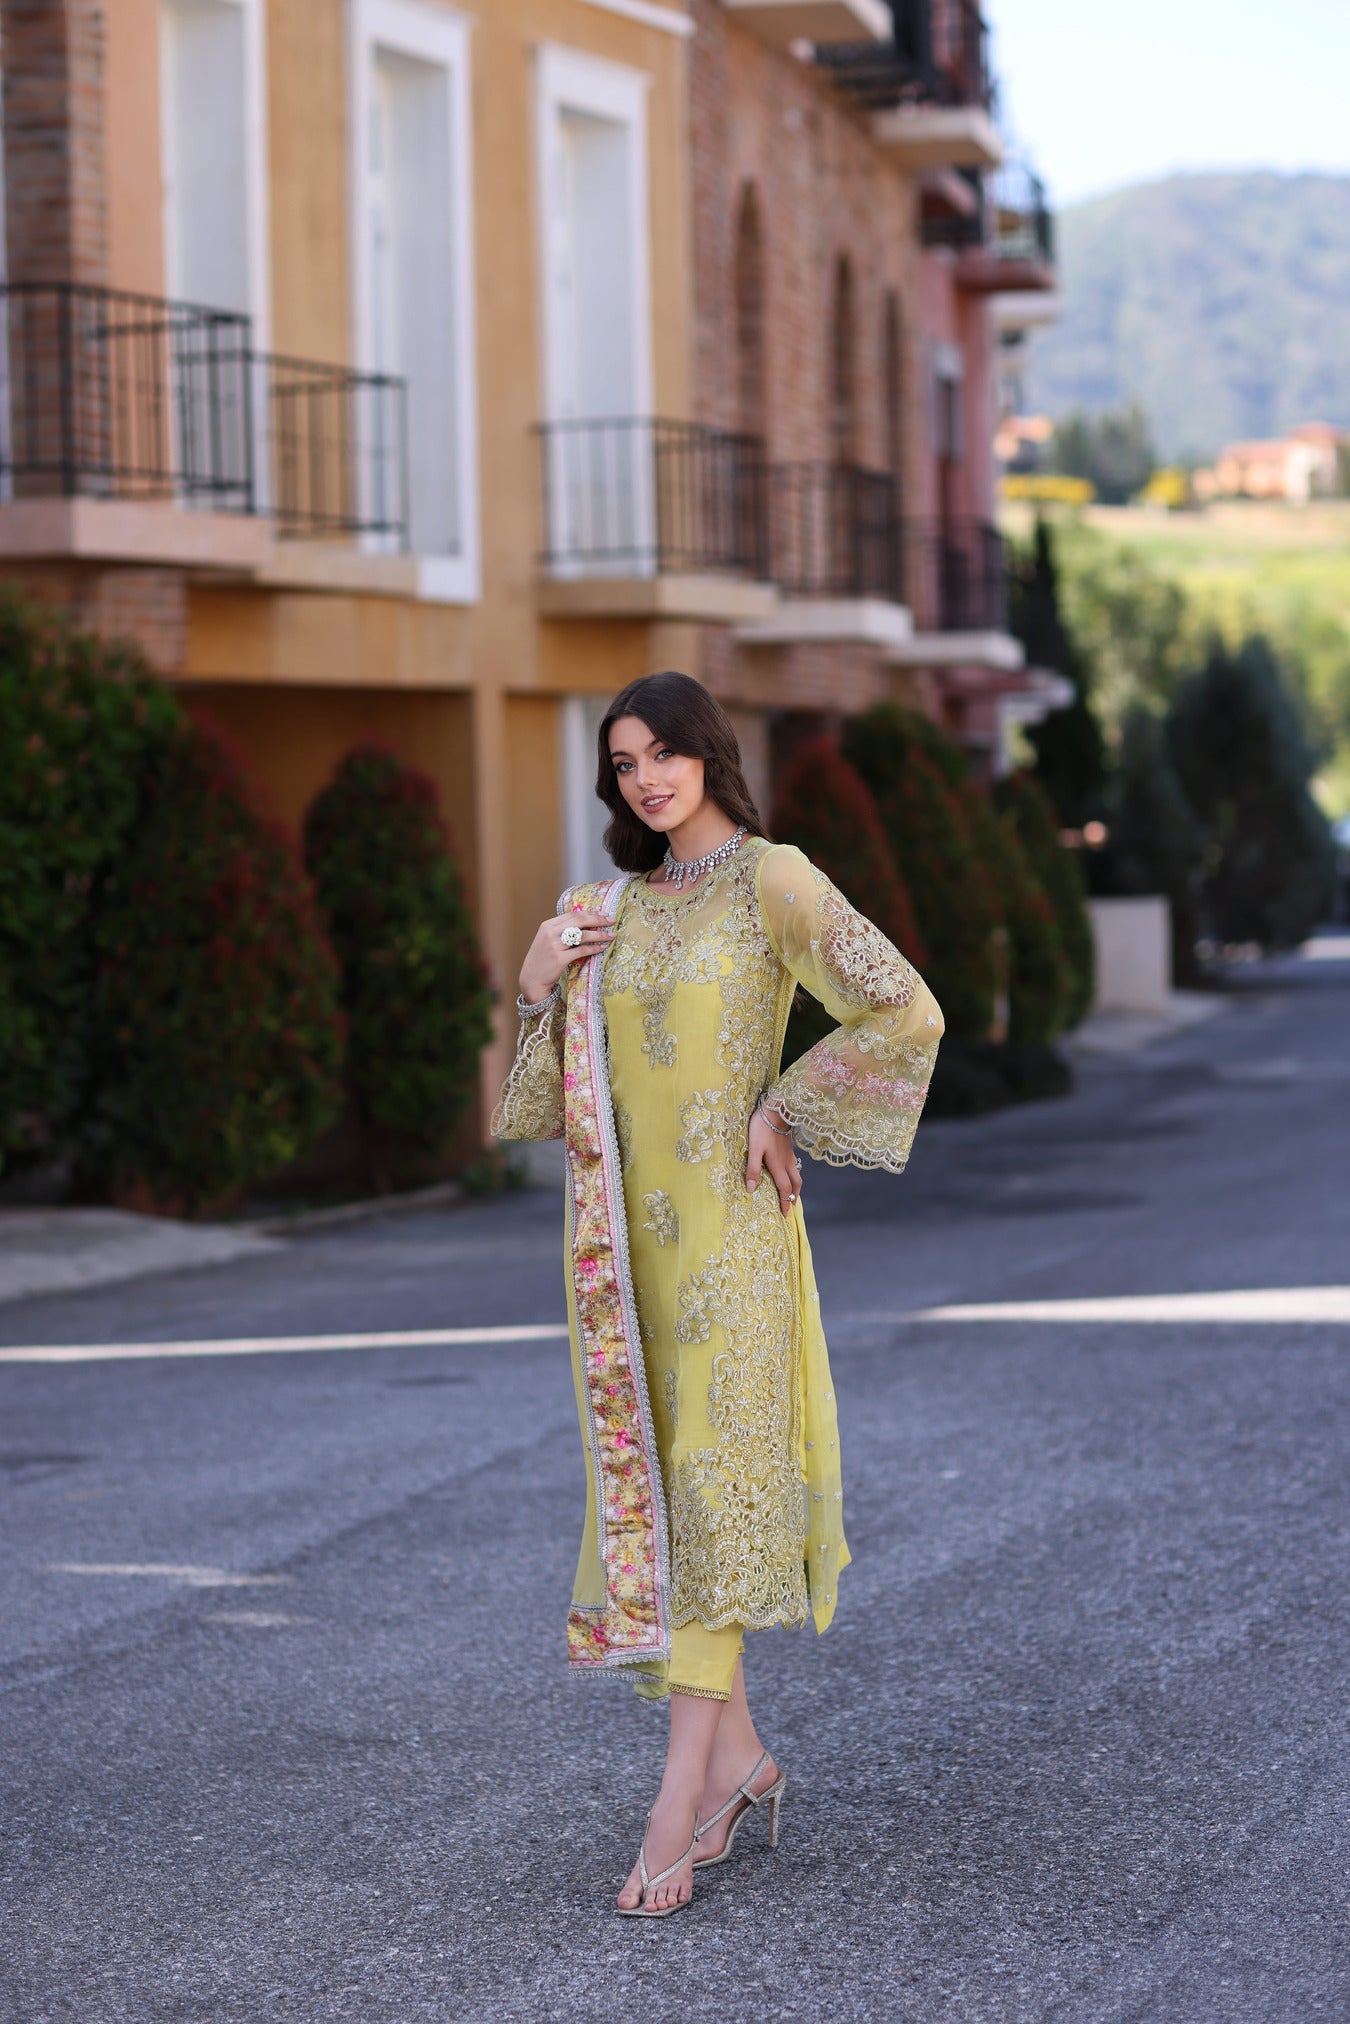 Buy Now, Minali - Noor Chiffons 2023 - Saadia Asad - Wedding and Bridal Party Dresses - Shahana UK - Pakistani Bridal Dresses in UK